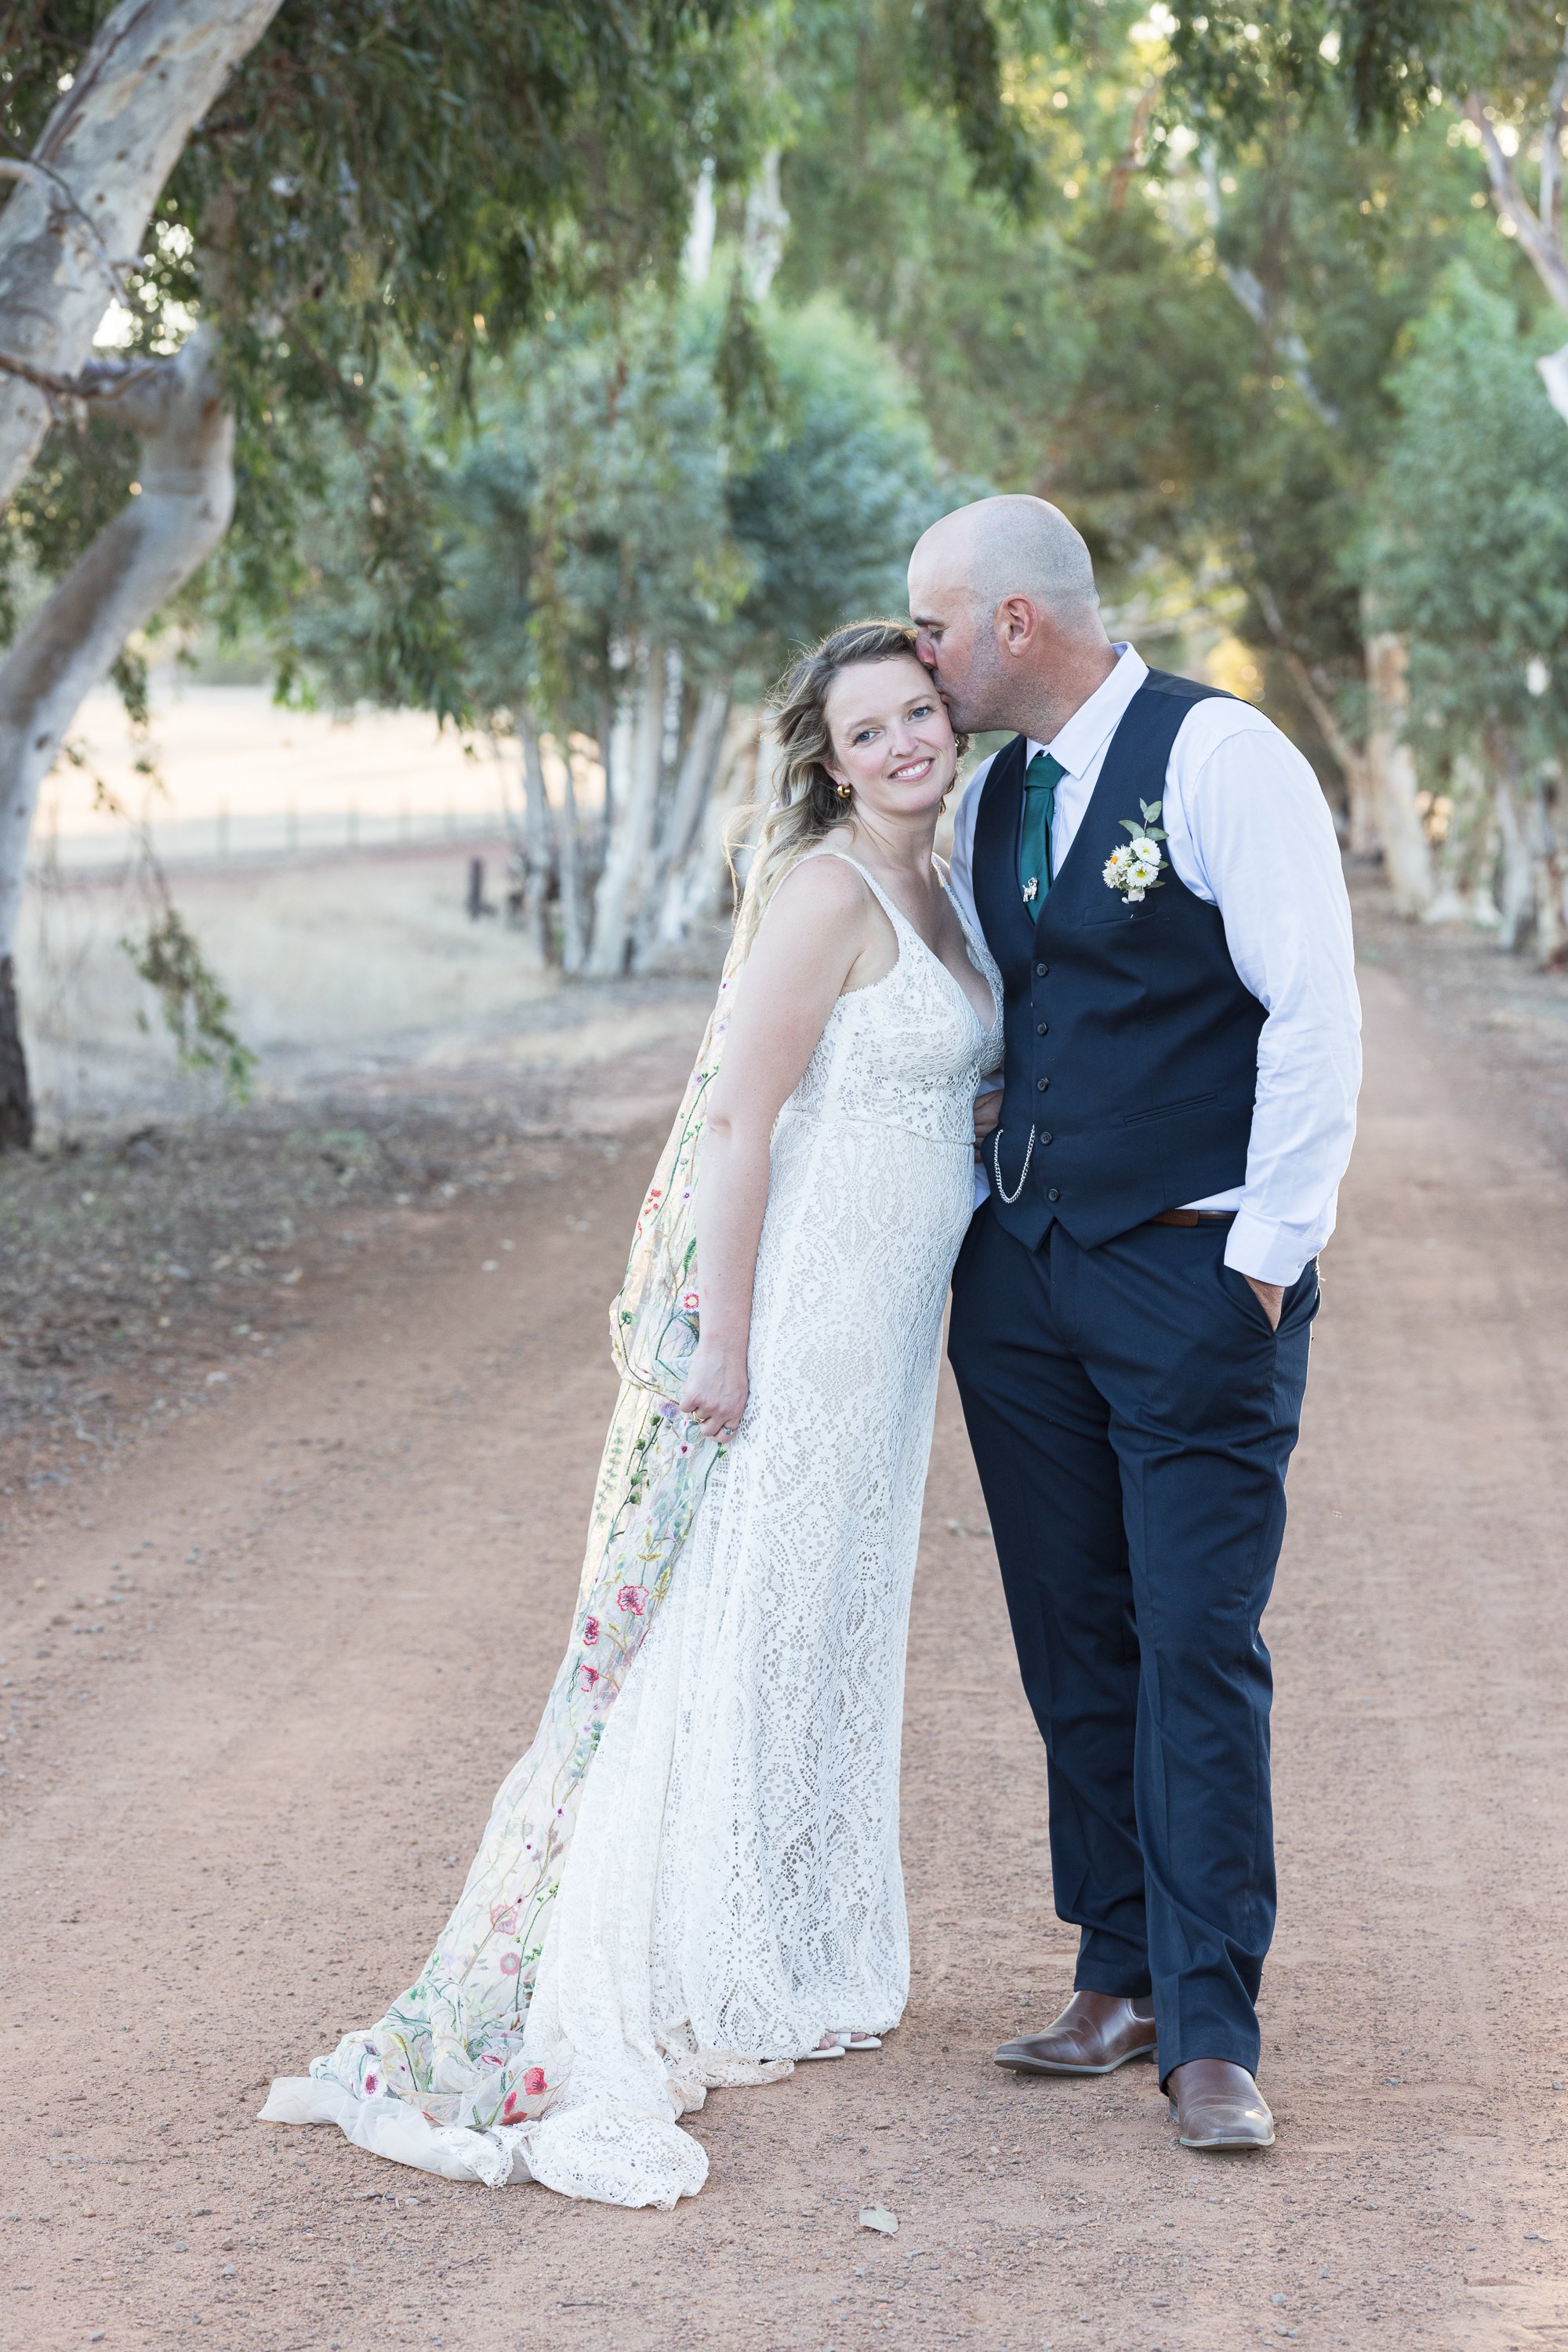 Michelle McKoy - Wedding photographer Geraldton Bri & Dan_B3A2589.jpg